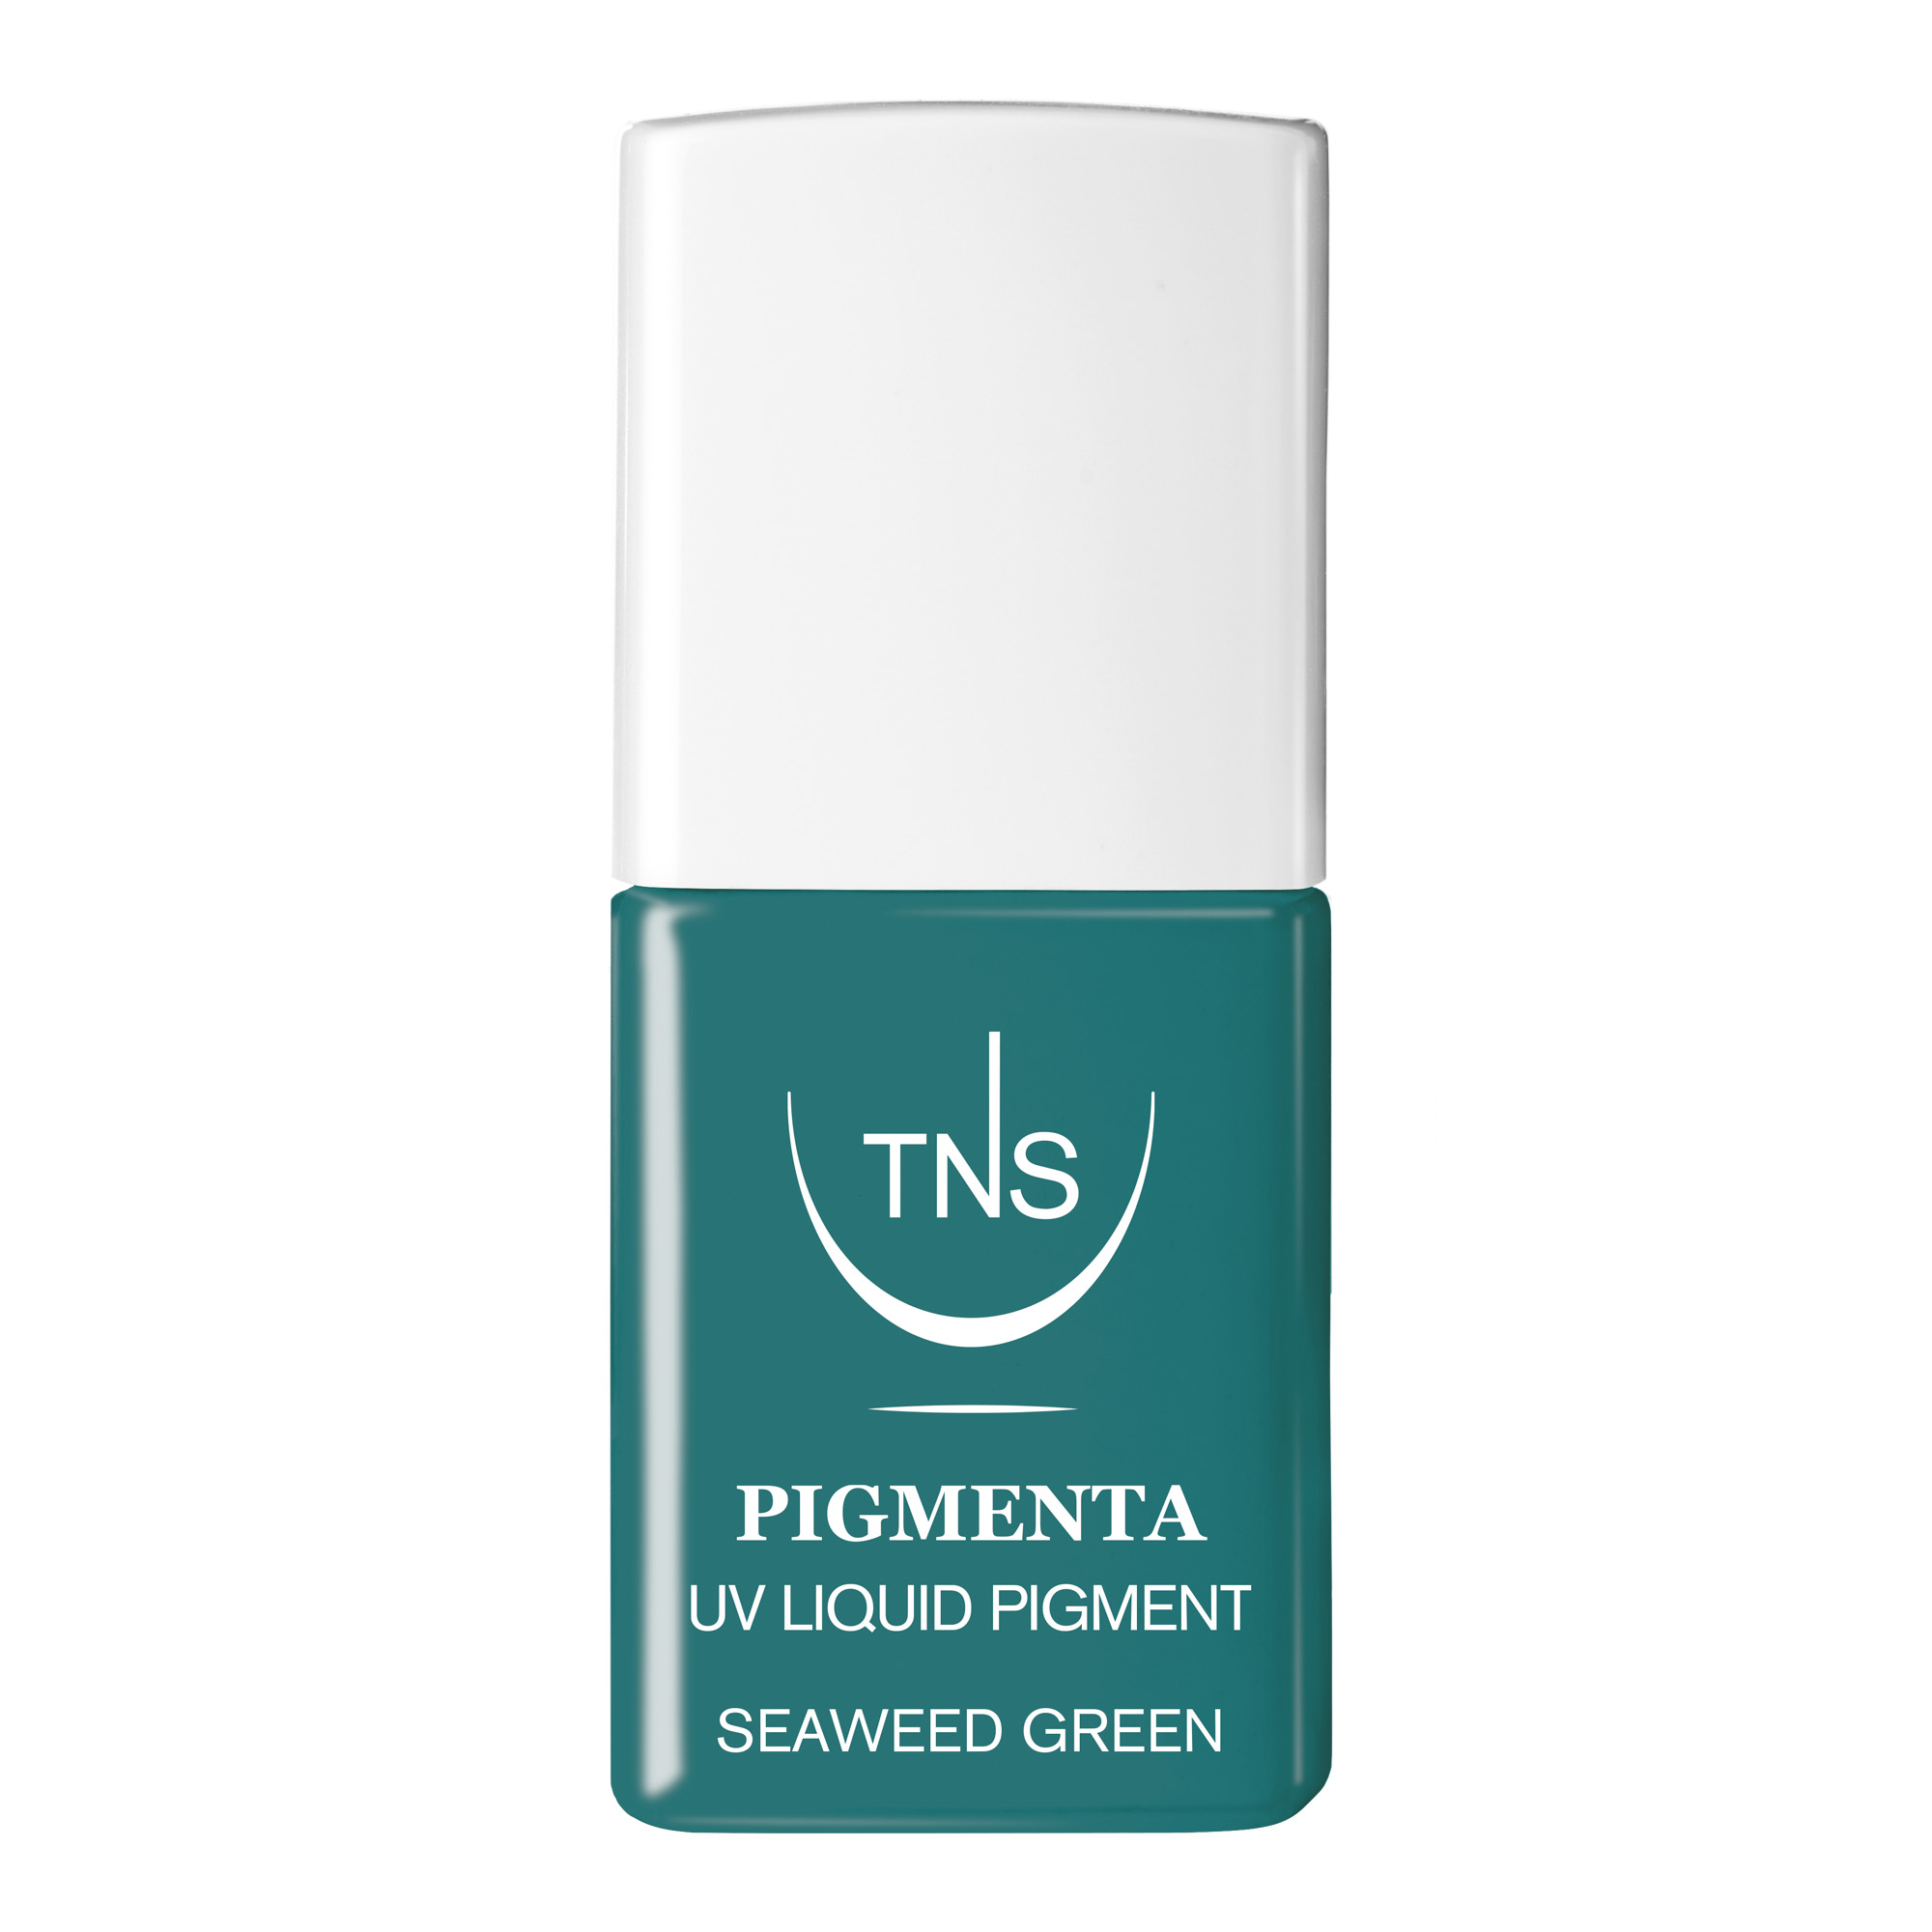 UV Flüssigpigment Seaweed Green dunkel smaragdgrün 10 ml Pigmenta TNS